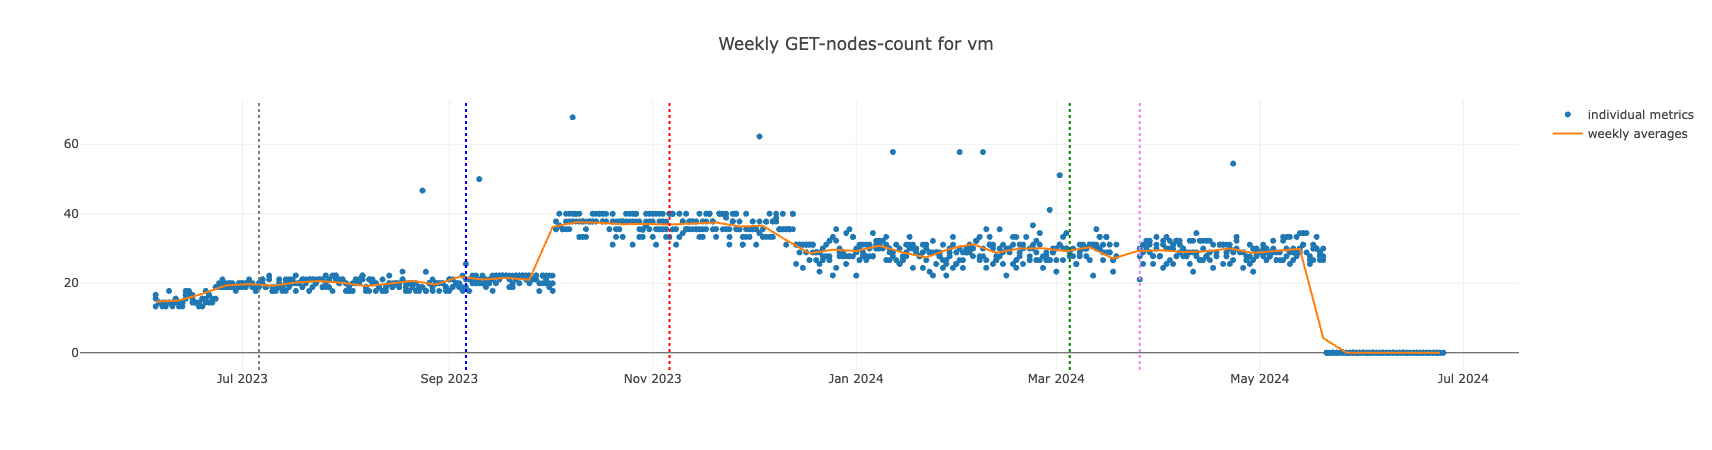 vm-get-nodes-count.png